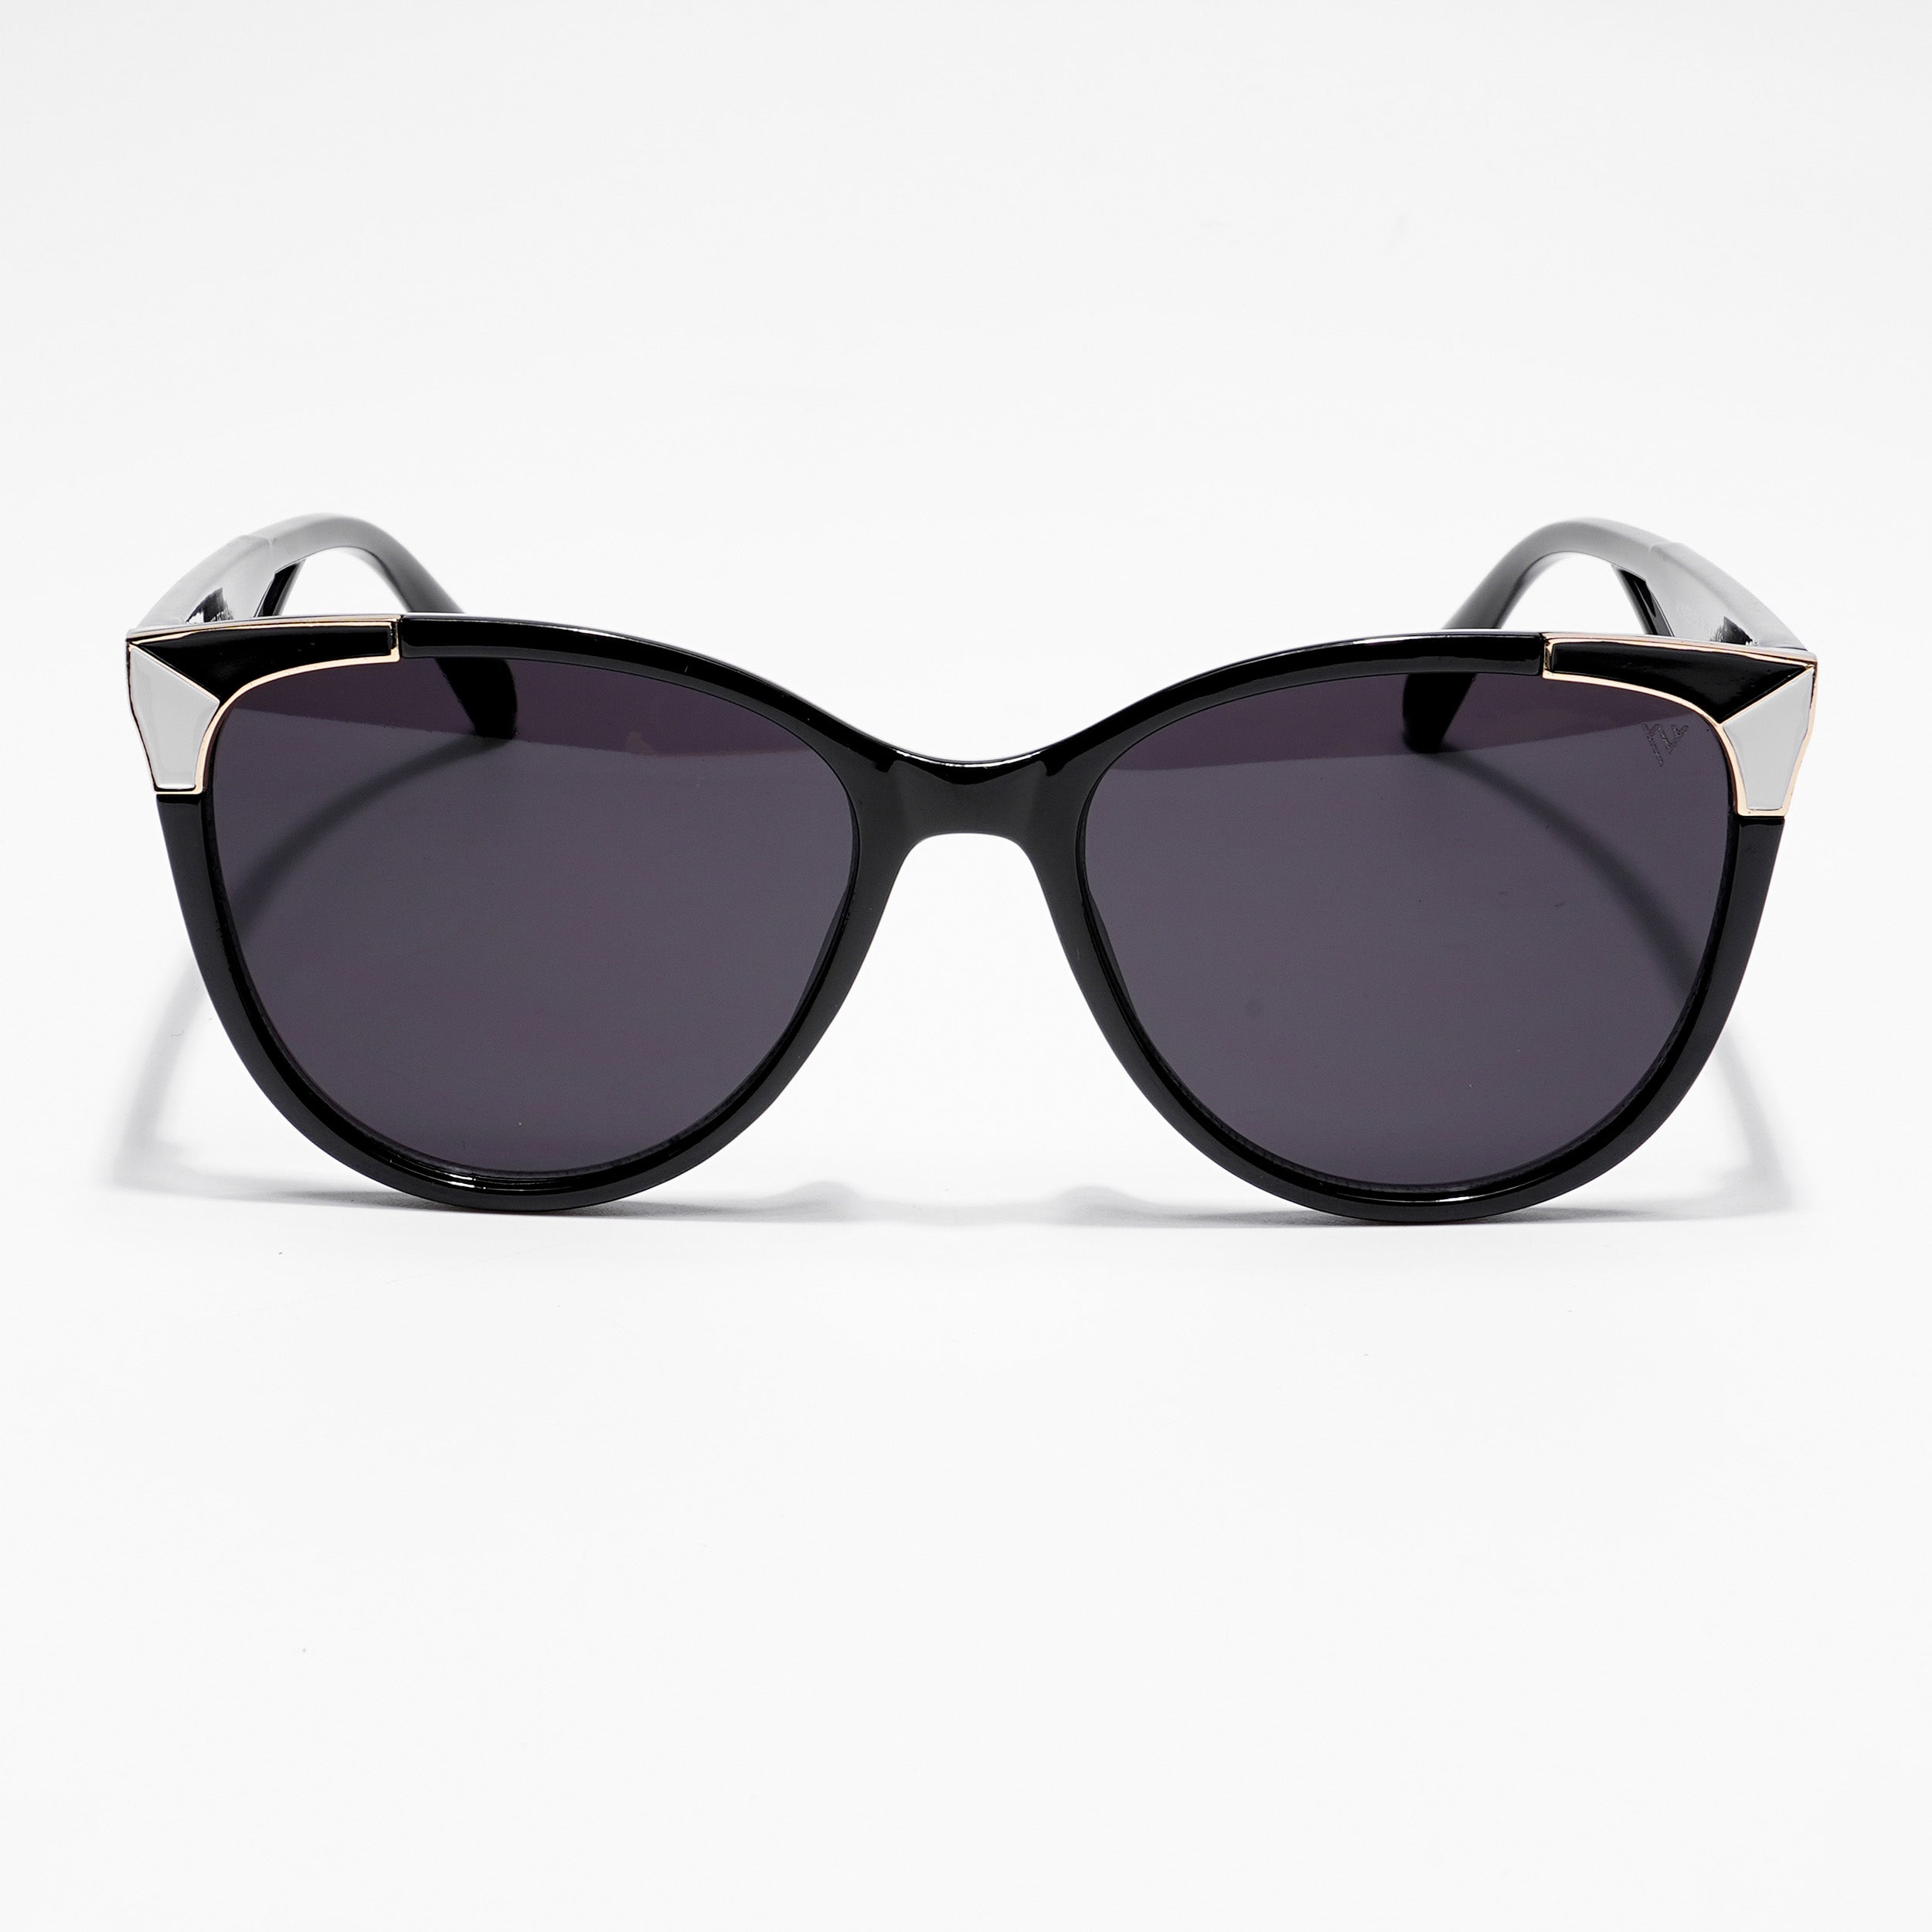 Voyage Black Cateye Sunglasses for Women - MG4228